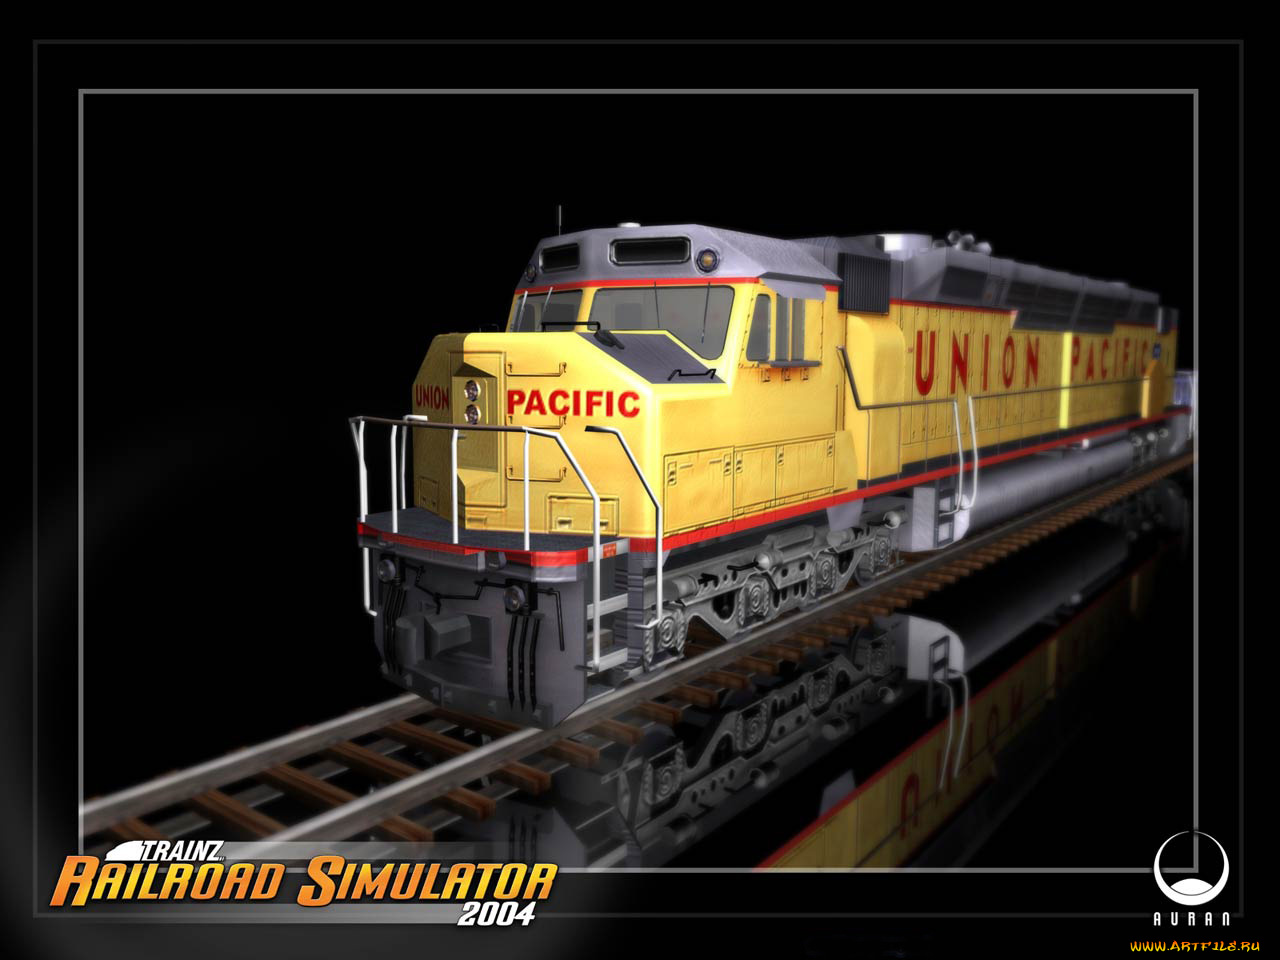 trainz, railroad, simulator, 2004, видео, игры